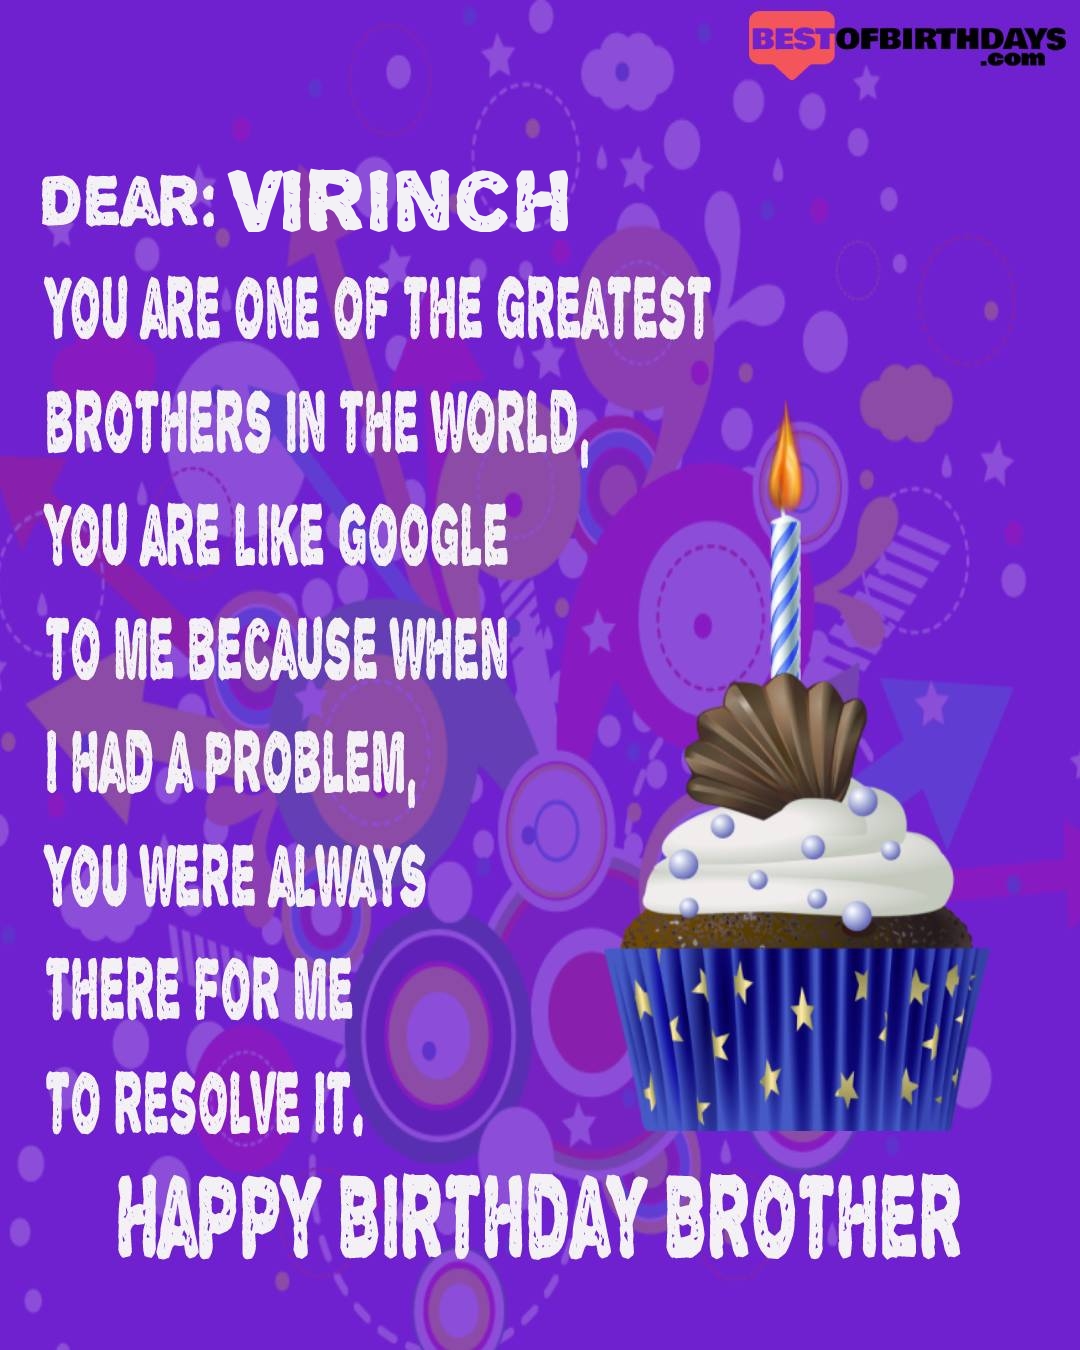 Happy birthday virinch bhai brother bro